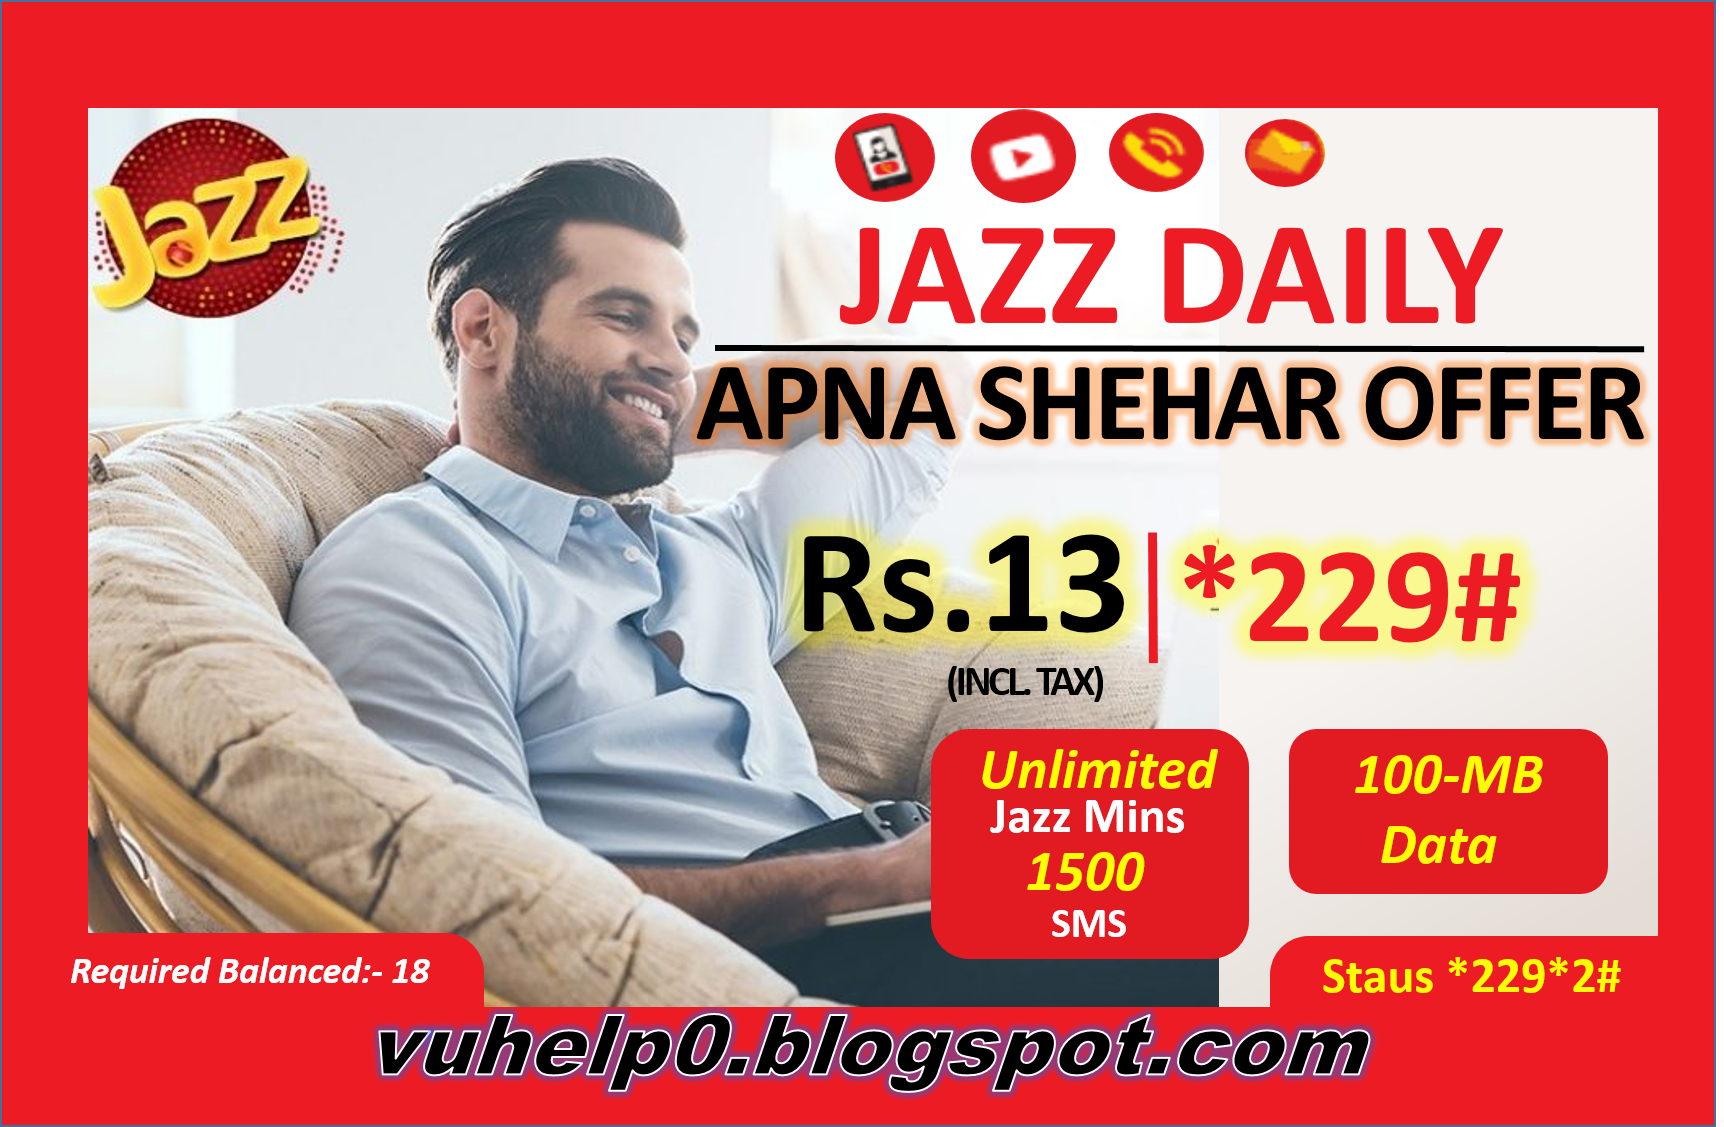 Jazz Daily Apna Shehar Offer | Jazz *229# Offer